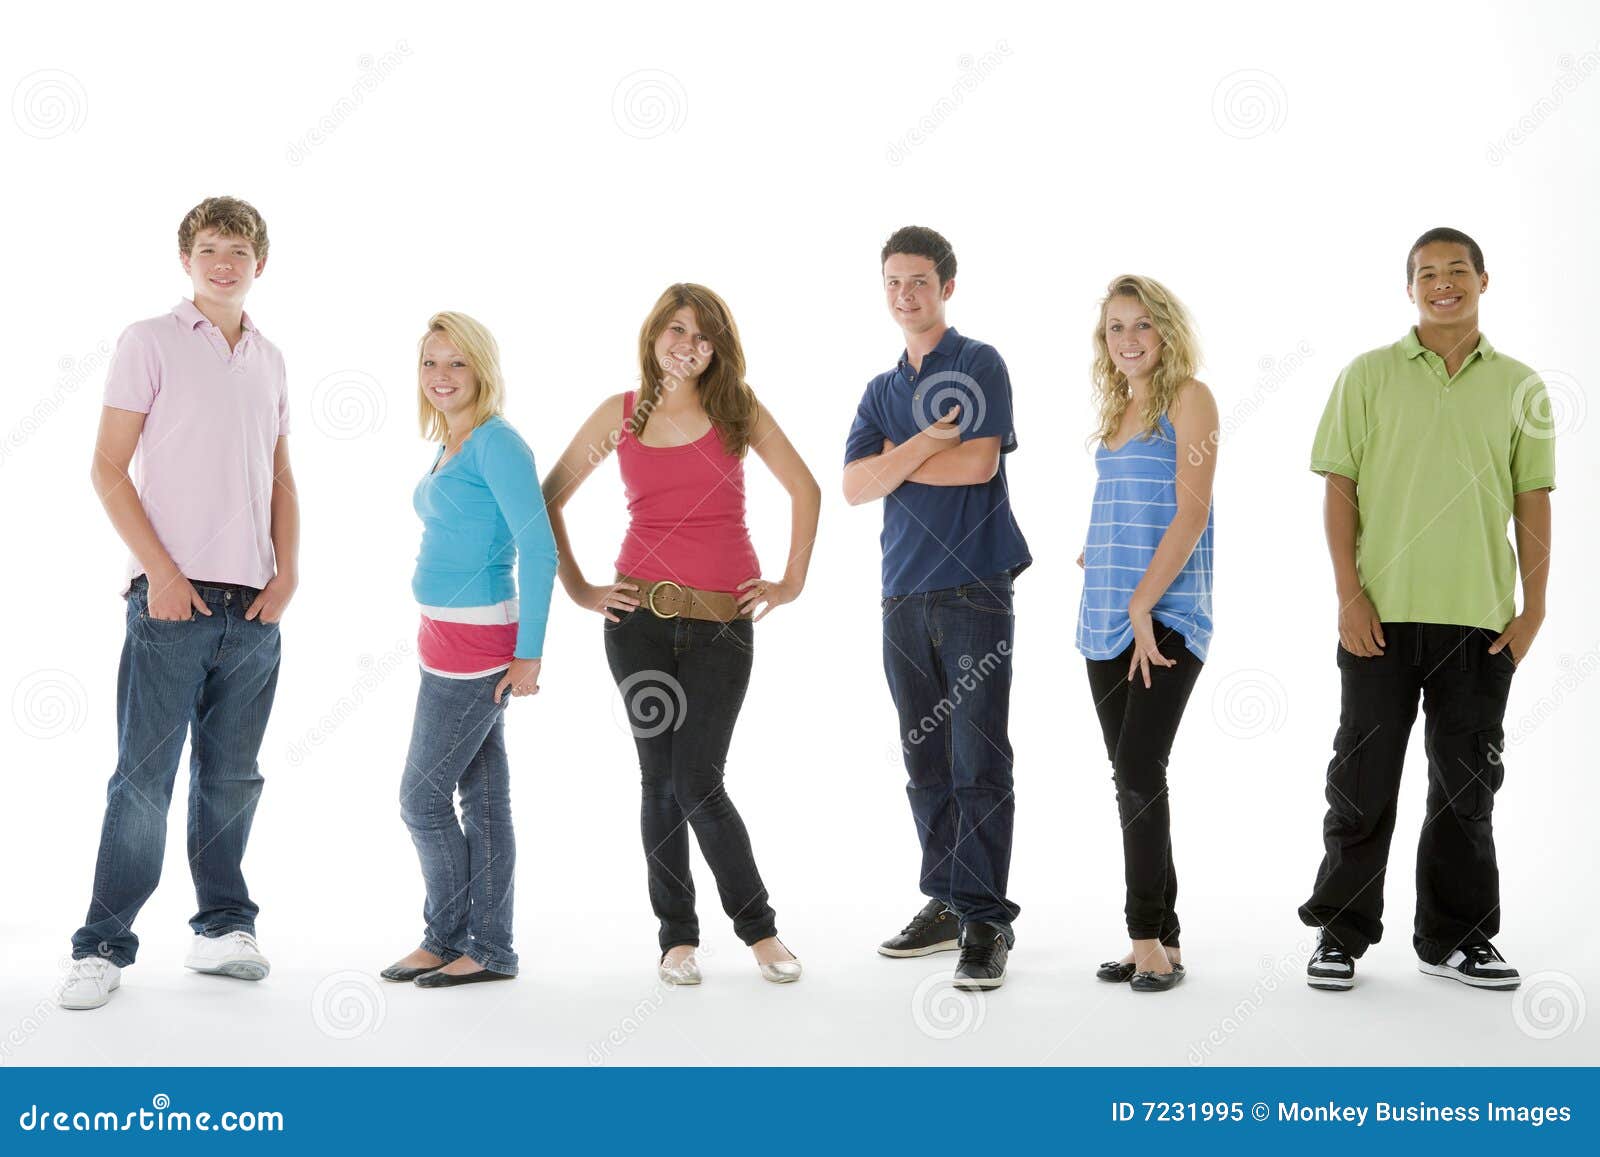 group shot of teenagers